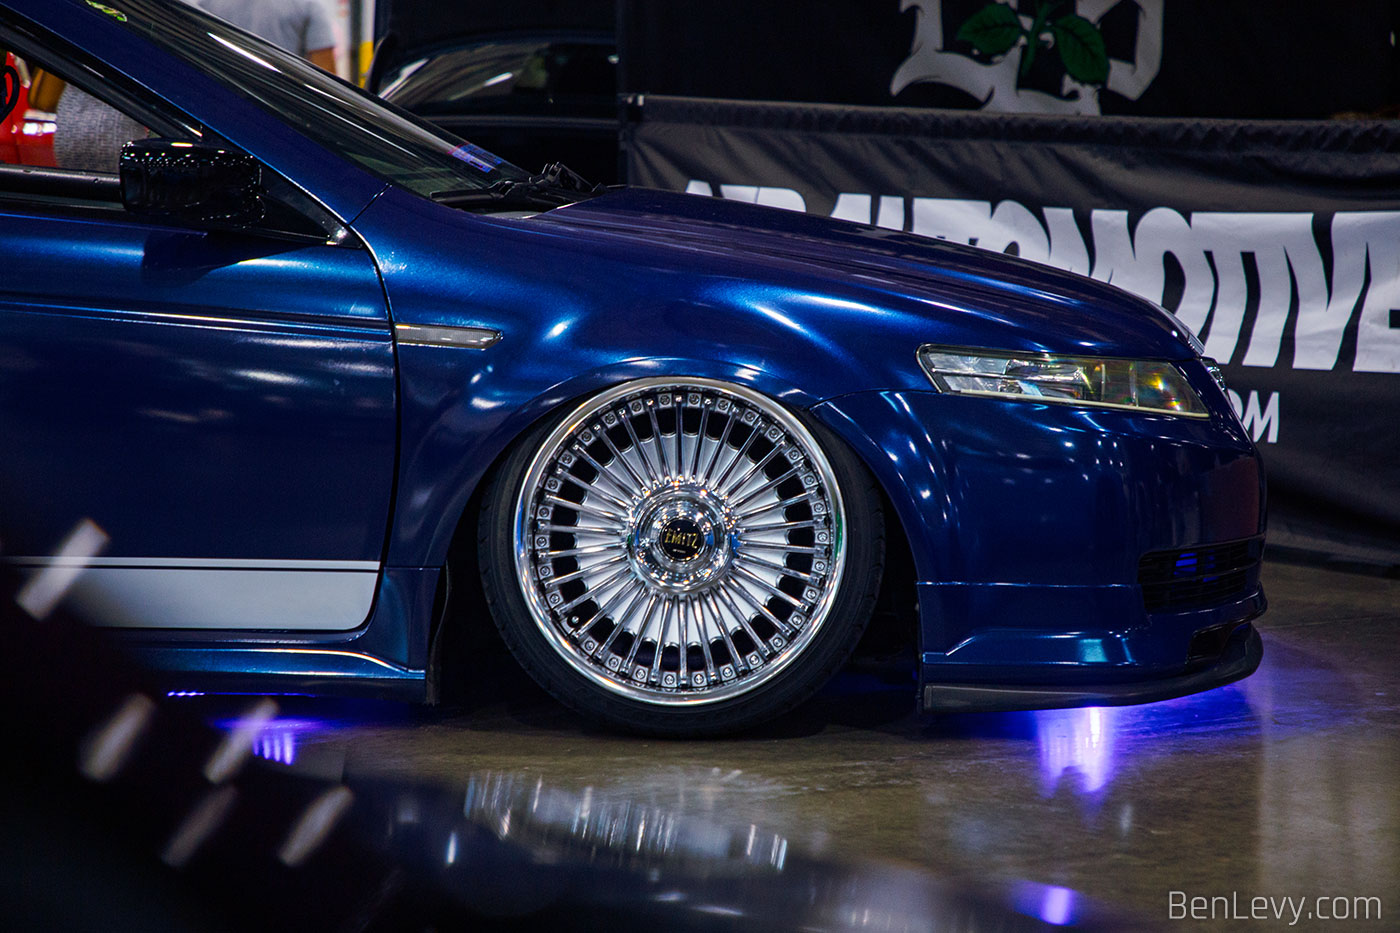 Blue Acura TL with Emitz wheels